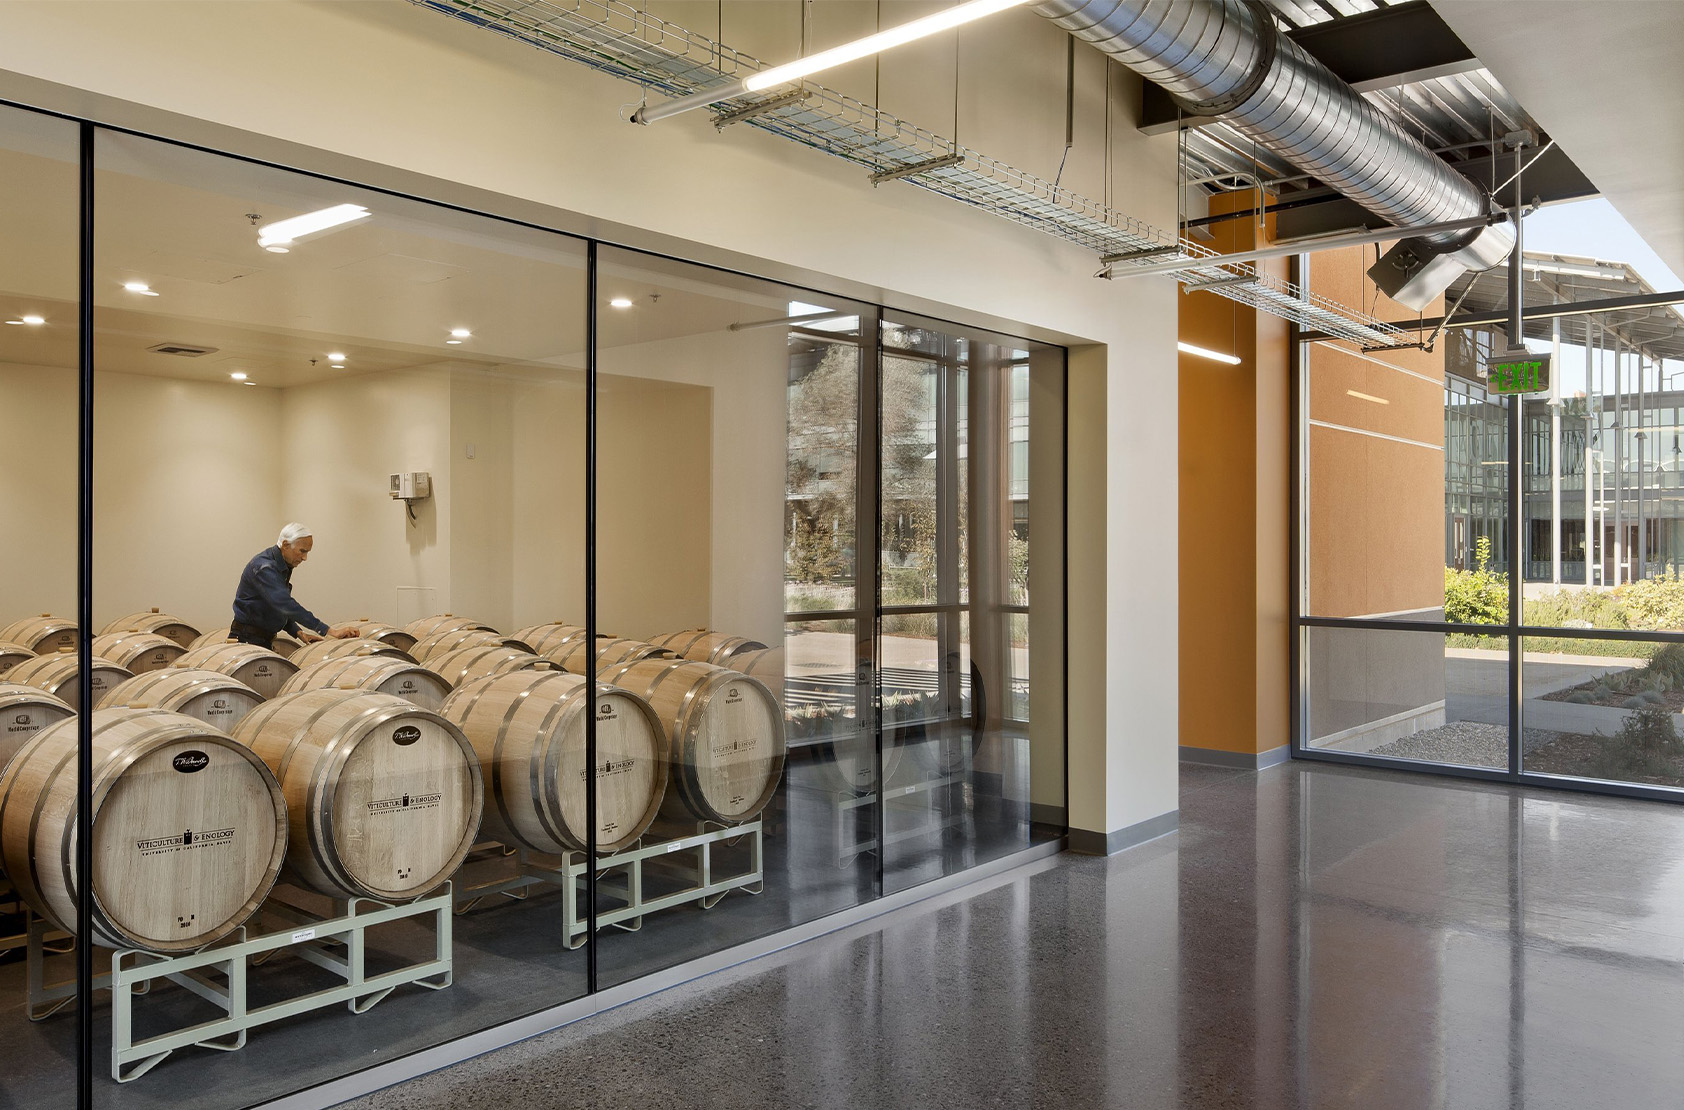 University of California, Davis - Winery, Brewery, and Food Science Laboratory